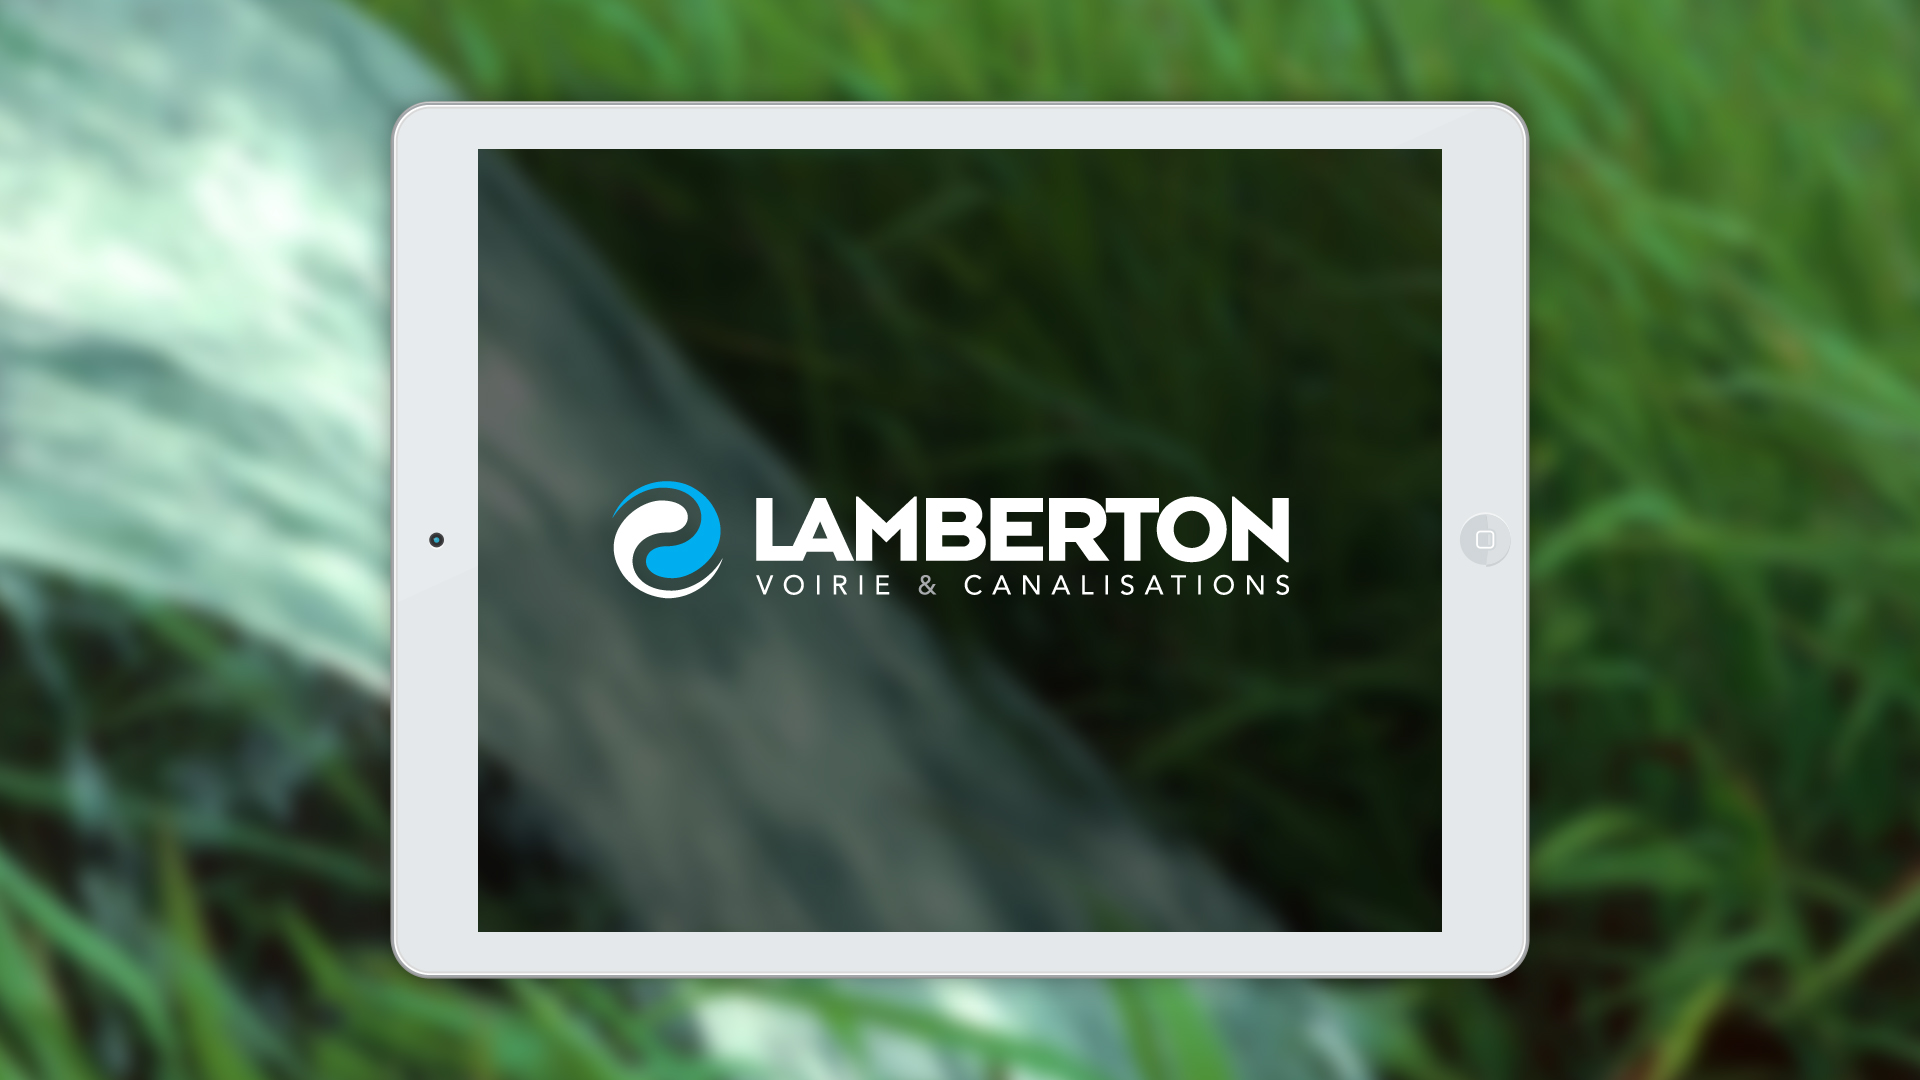 lamberton-apercu-logo-identite-logotype-creation-communication-caconcept-alexis-cretin-graphiste